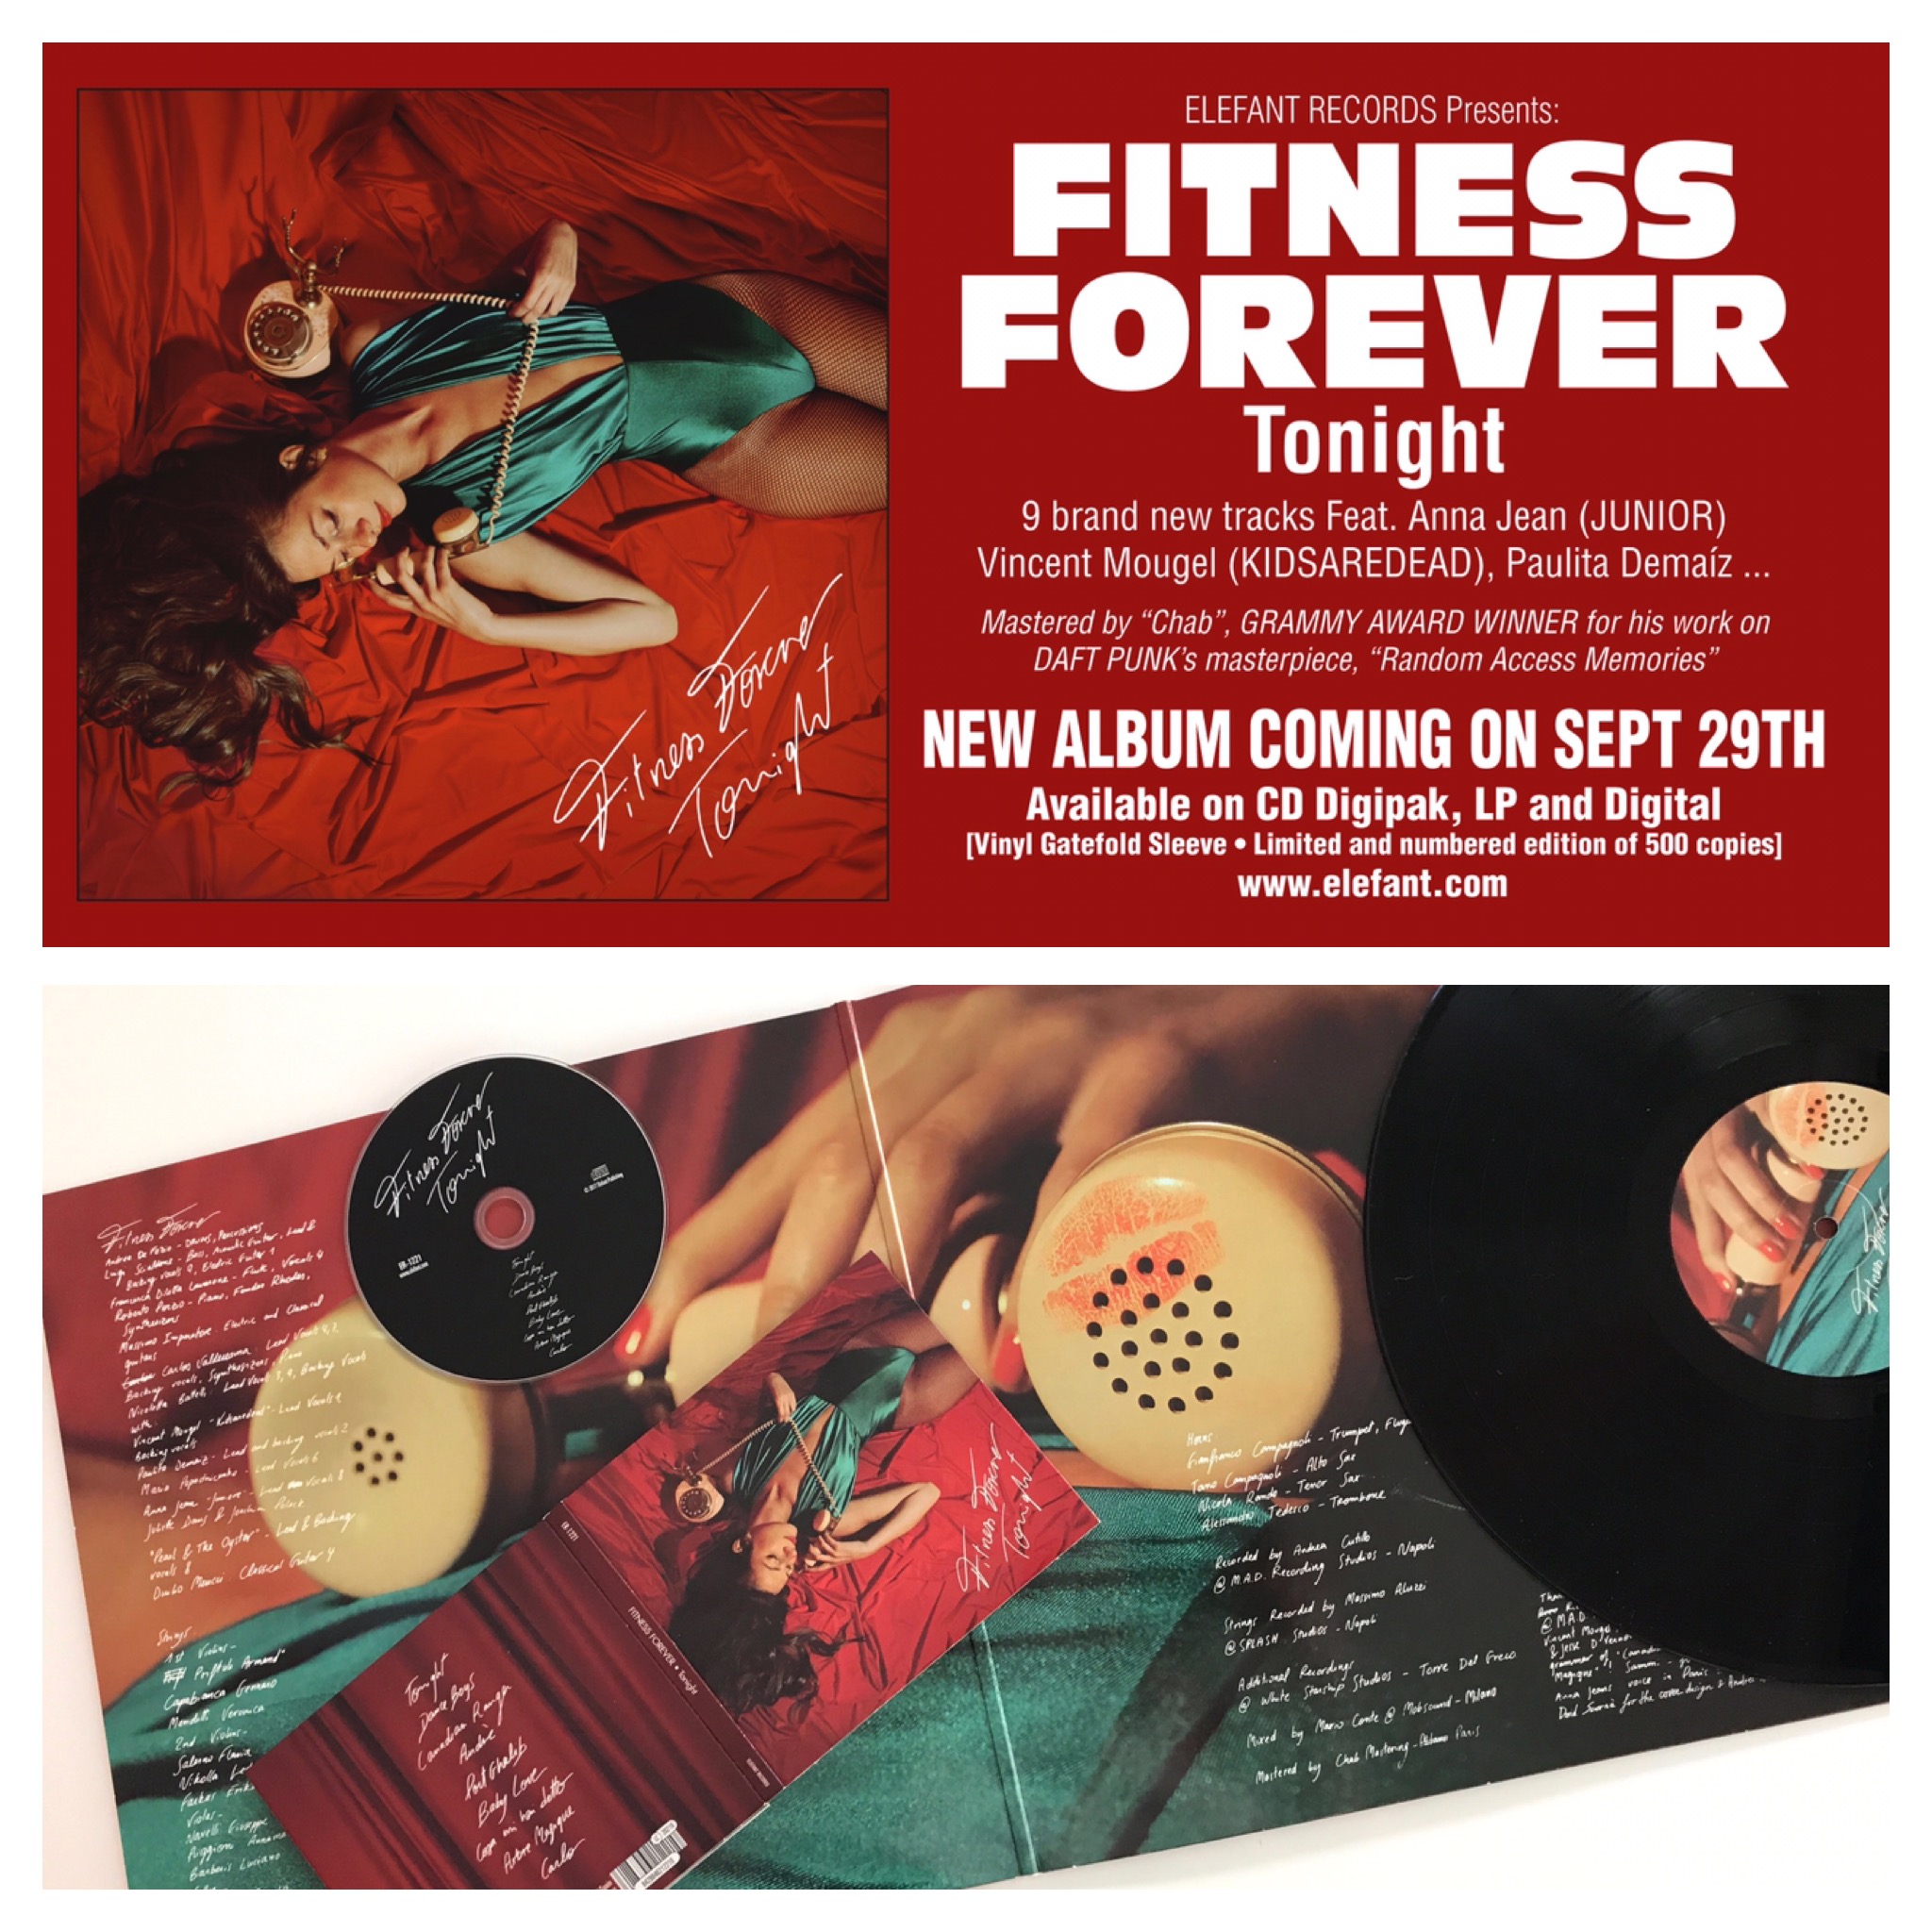 Fitness Forever "Tonight" LP/CD